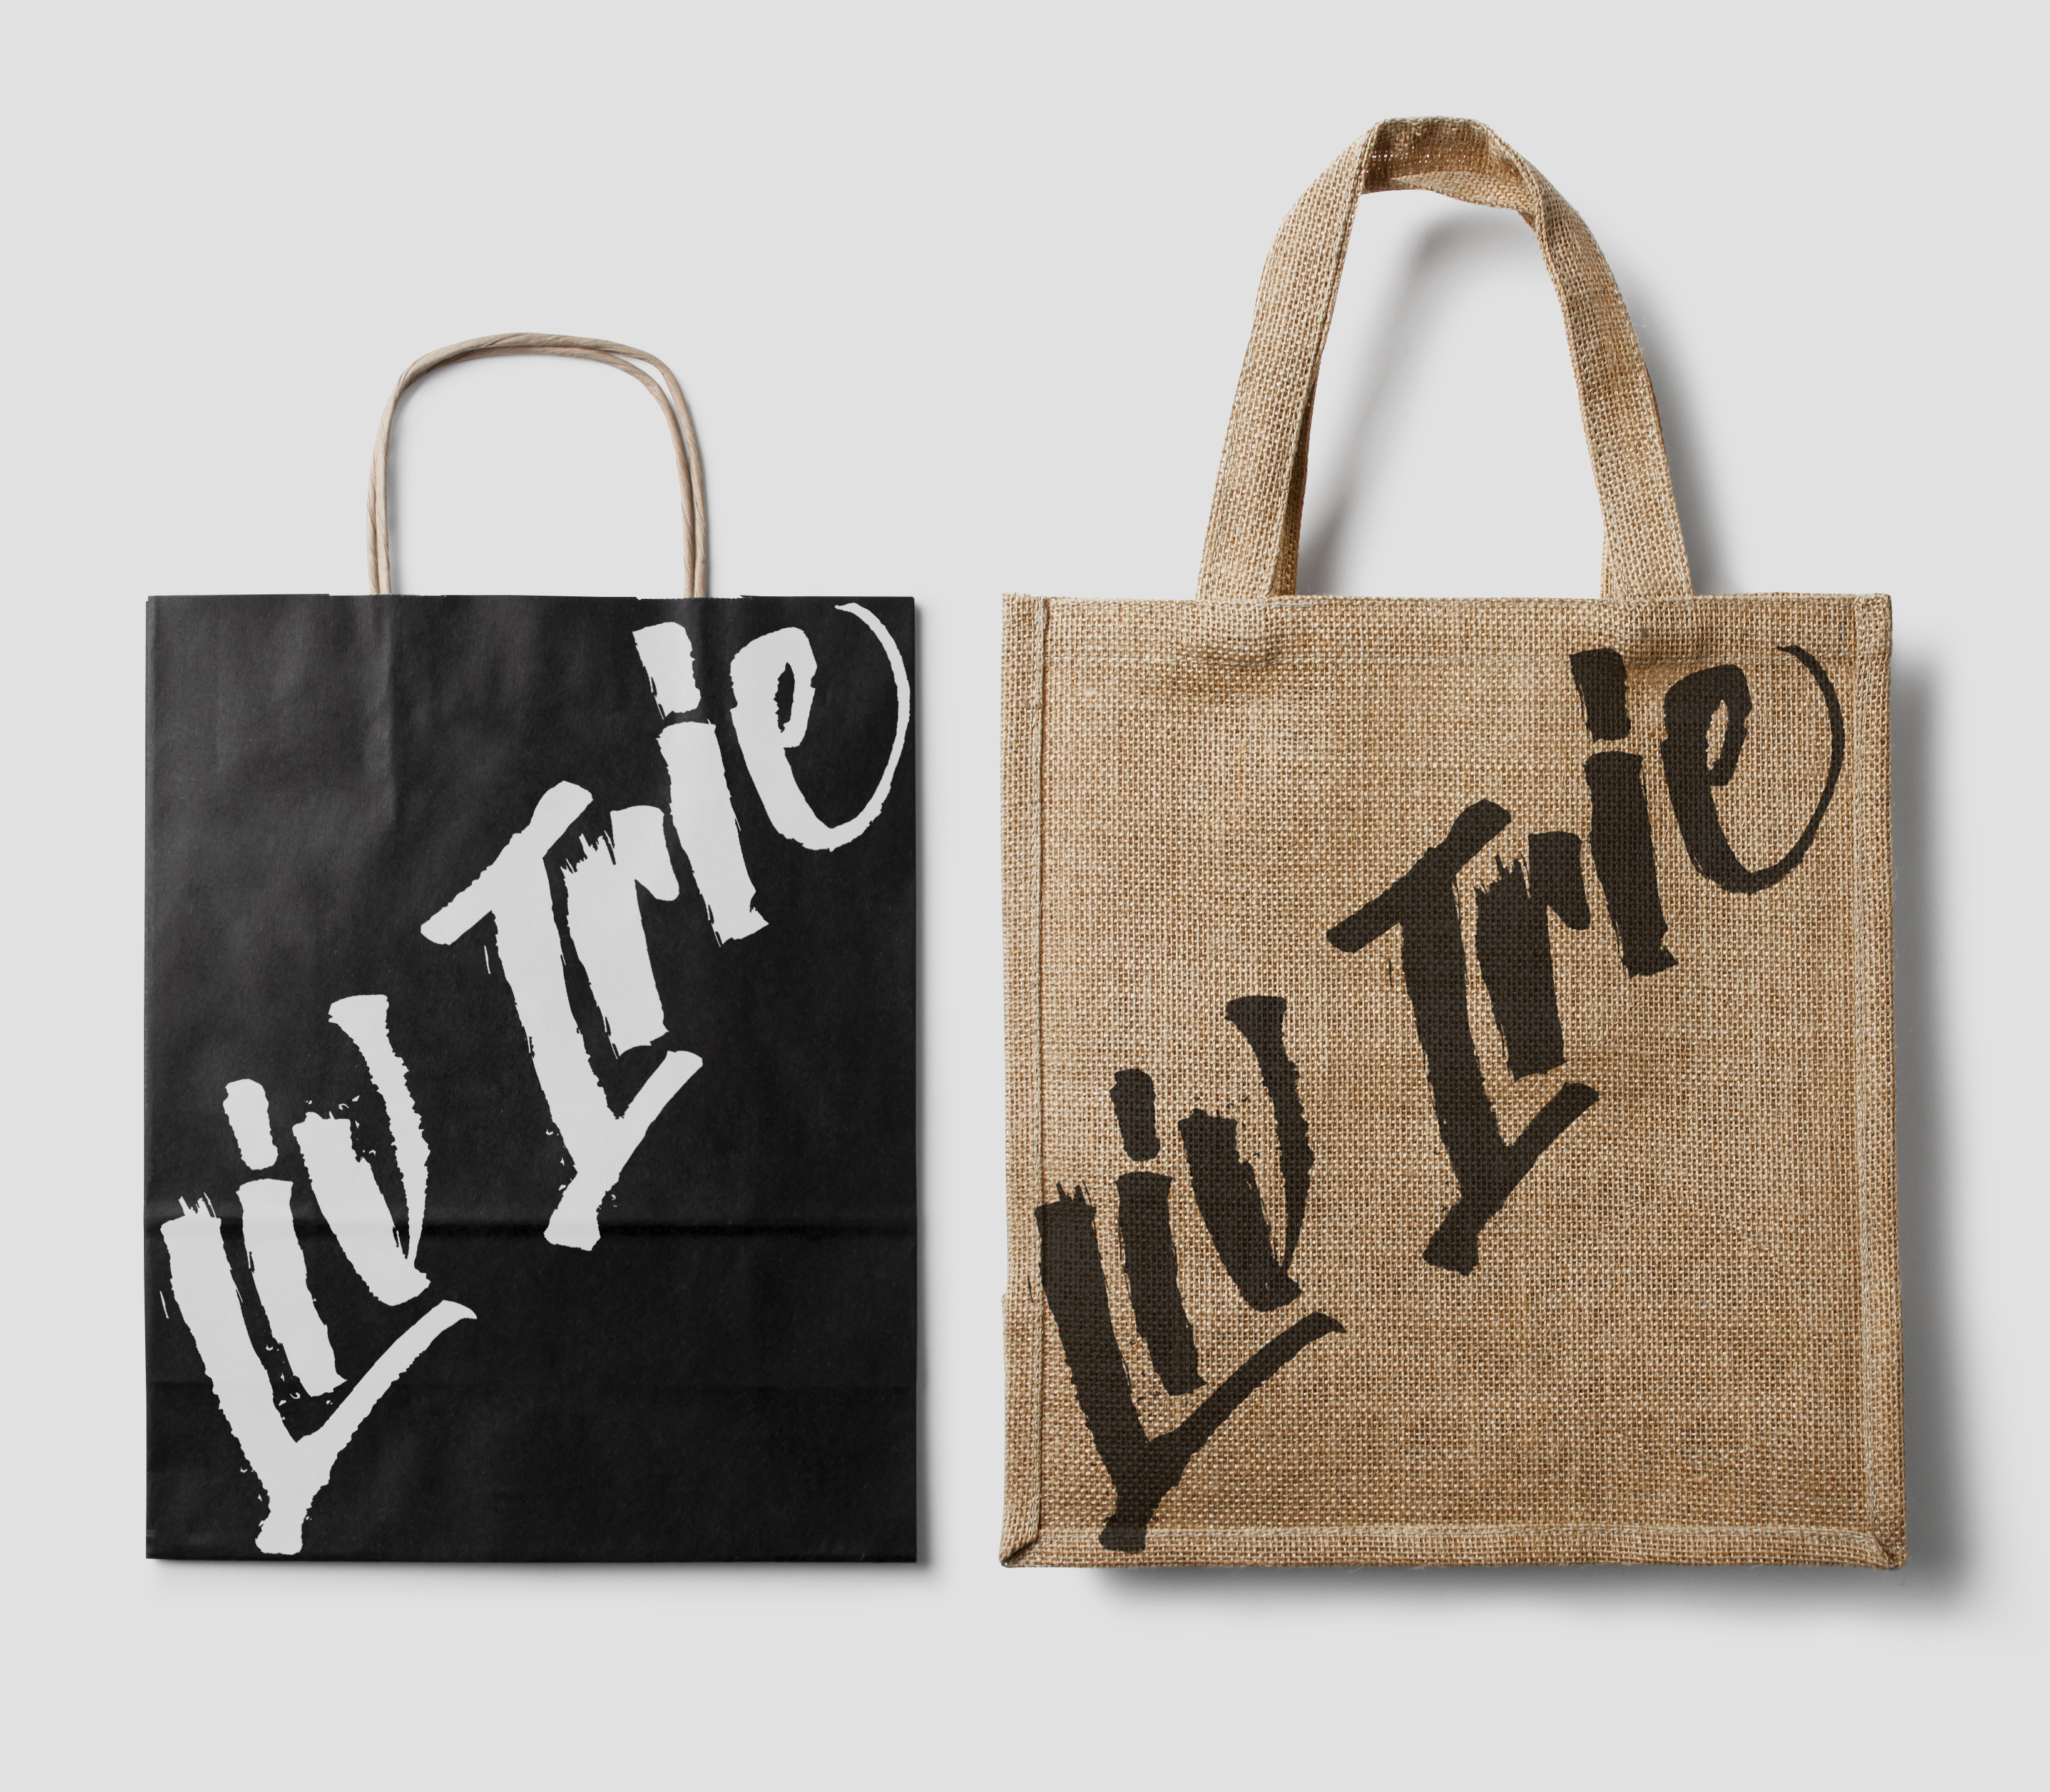 Liv Irie clothing company logo and bag mockup